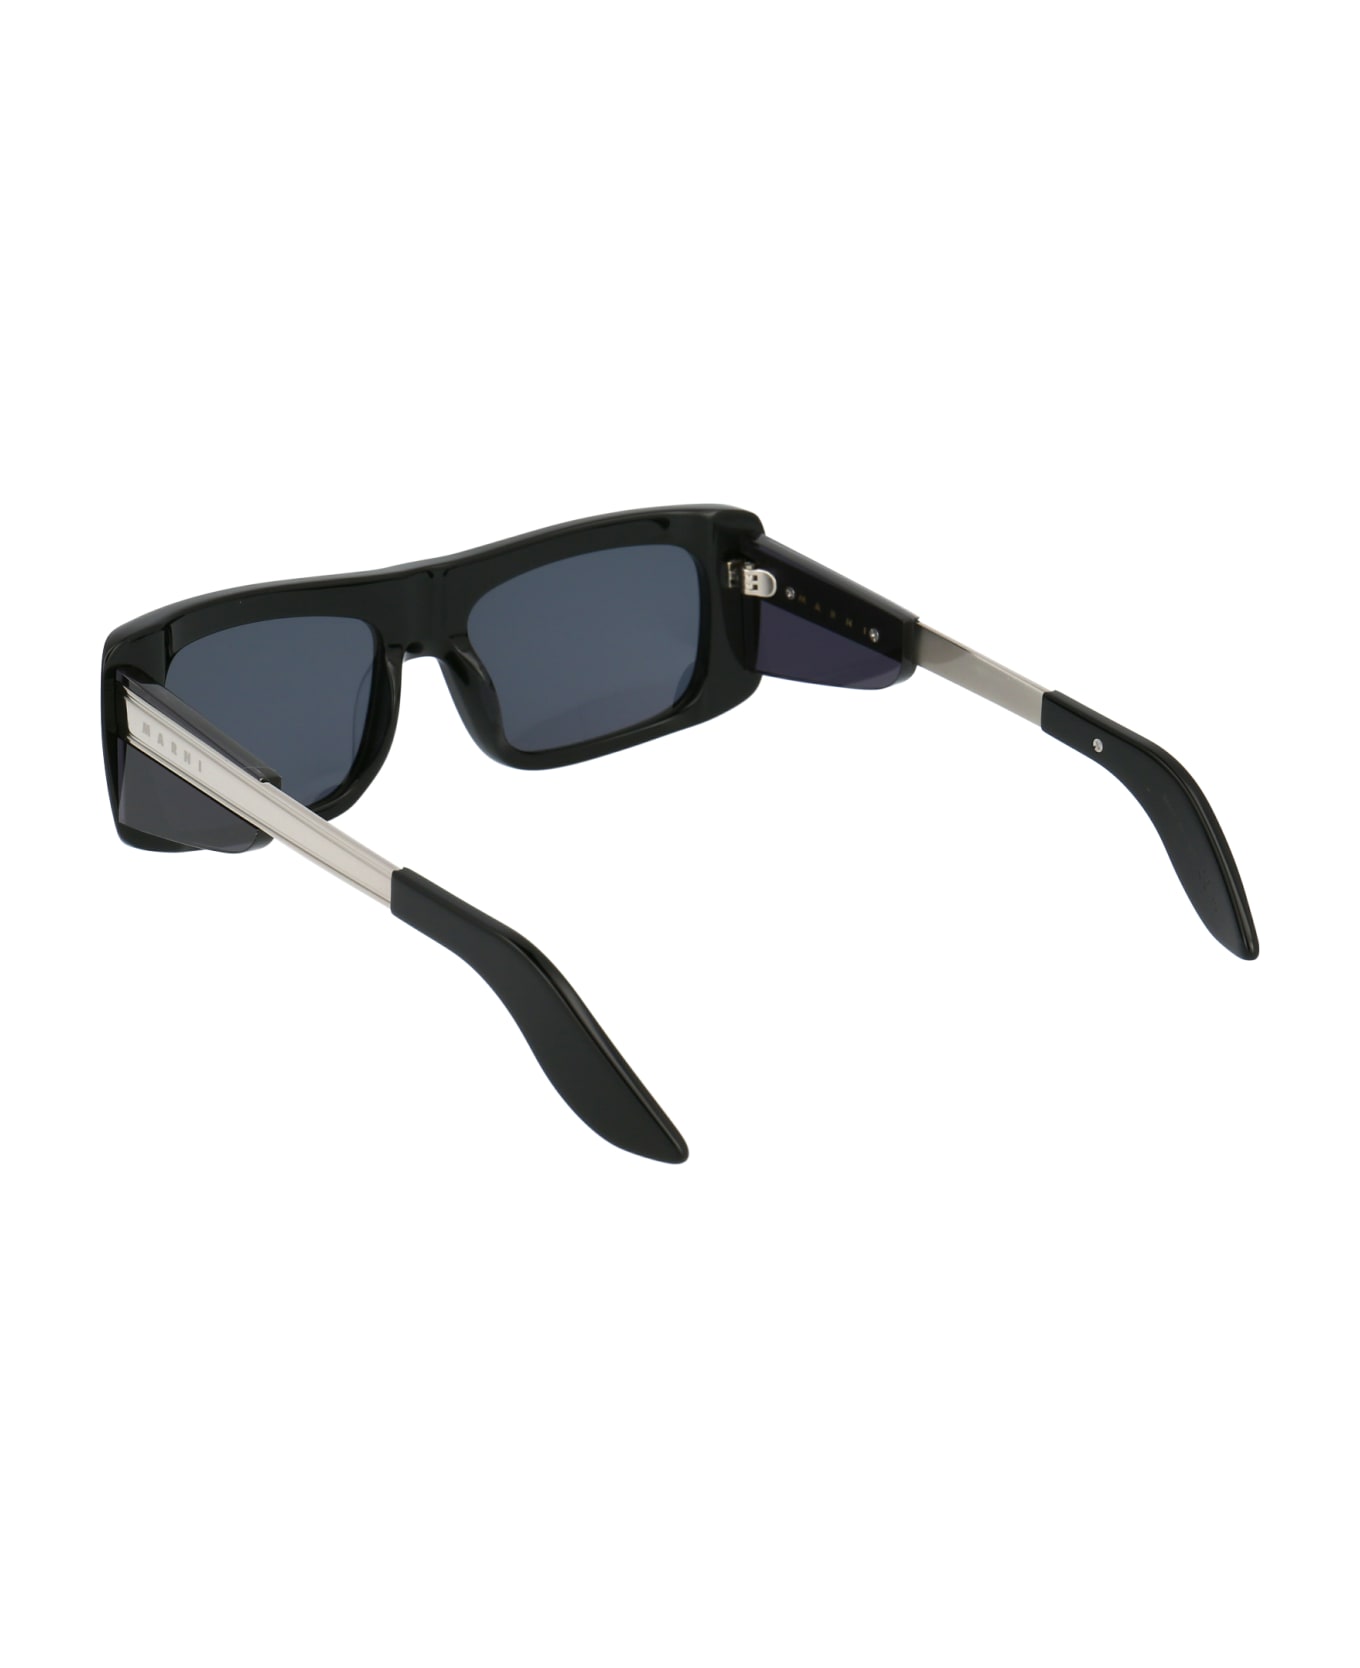 Marni Eyewear Me641s Sunglasses - 001 BLACK